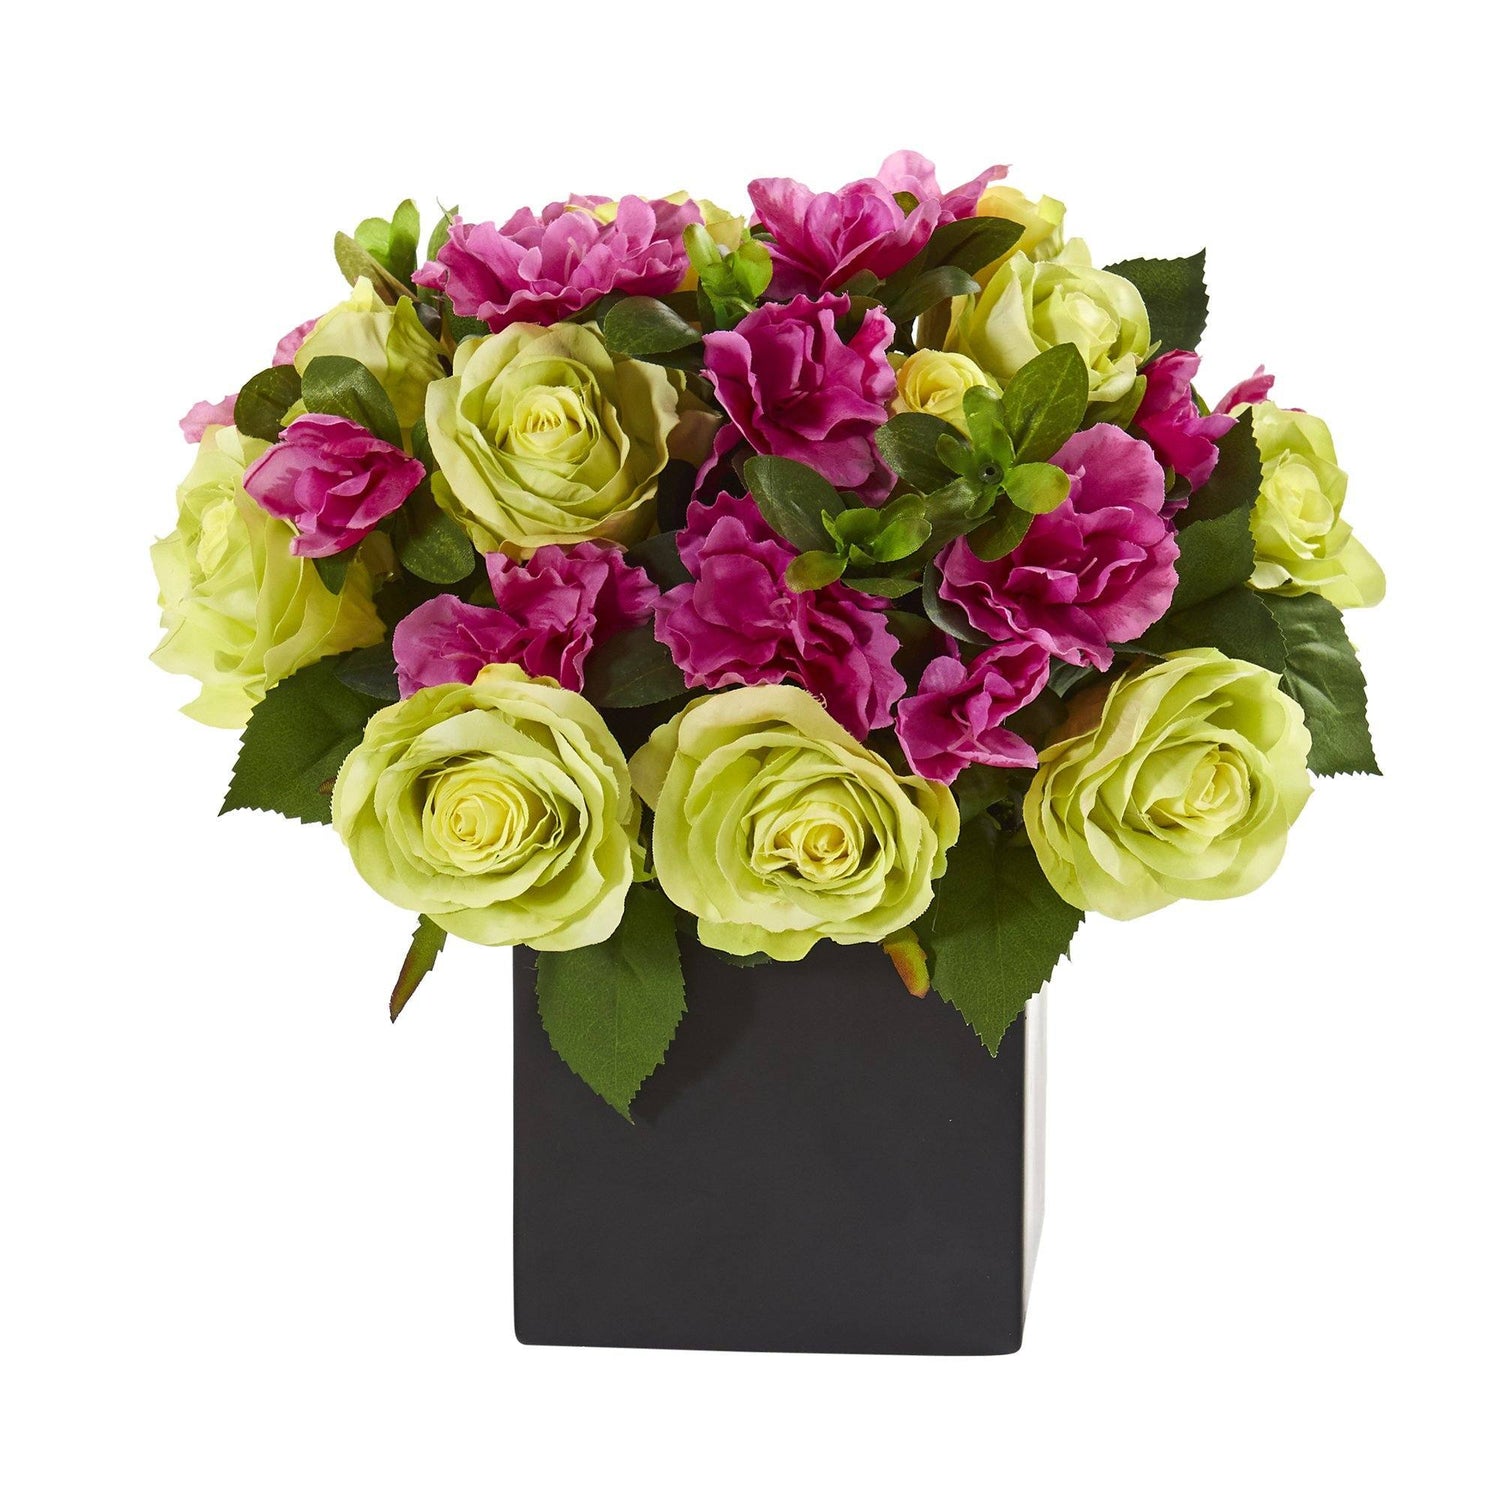 10” Rose and Azalea Artificial Arrangement in Black Vase